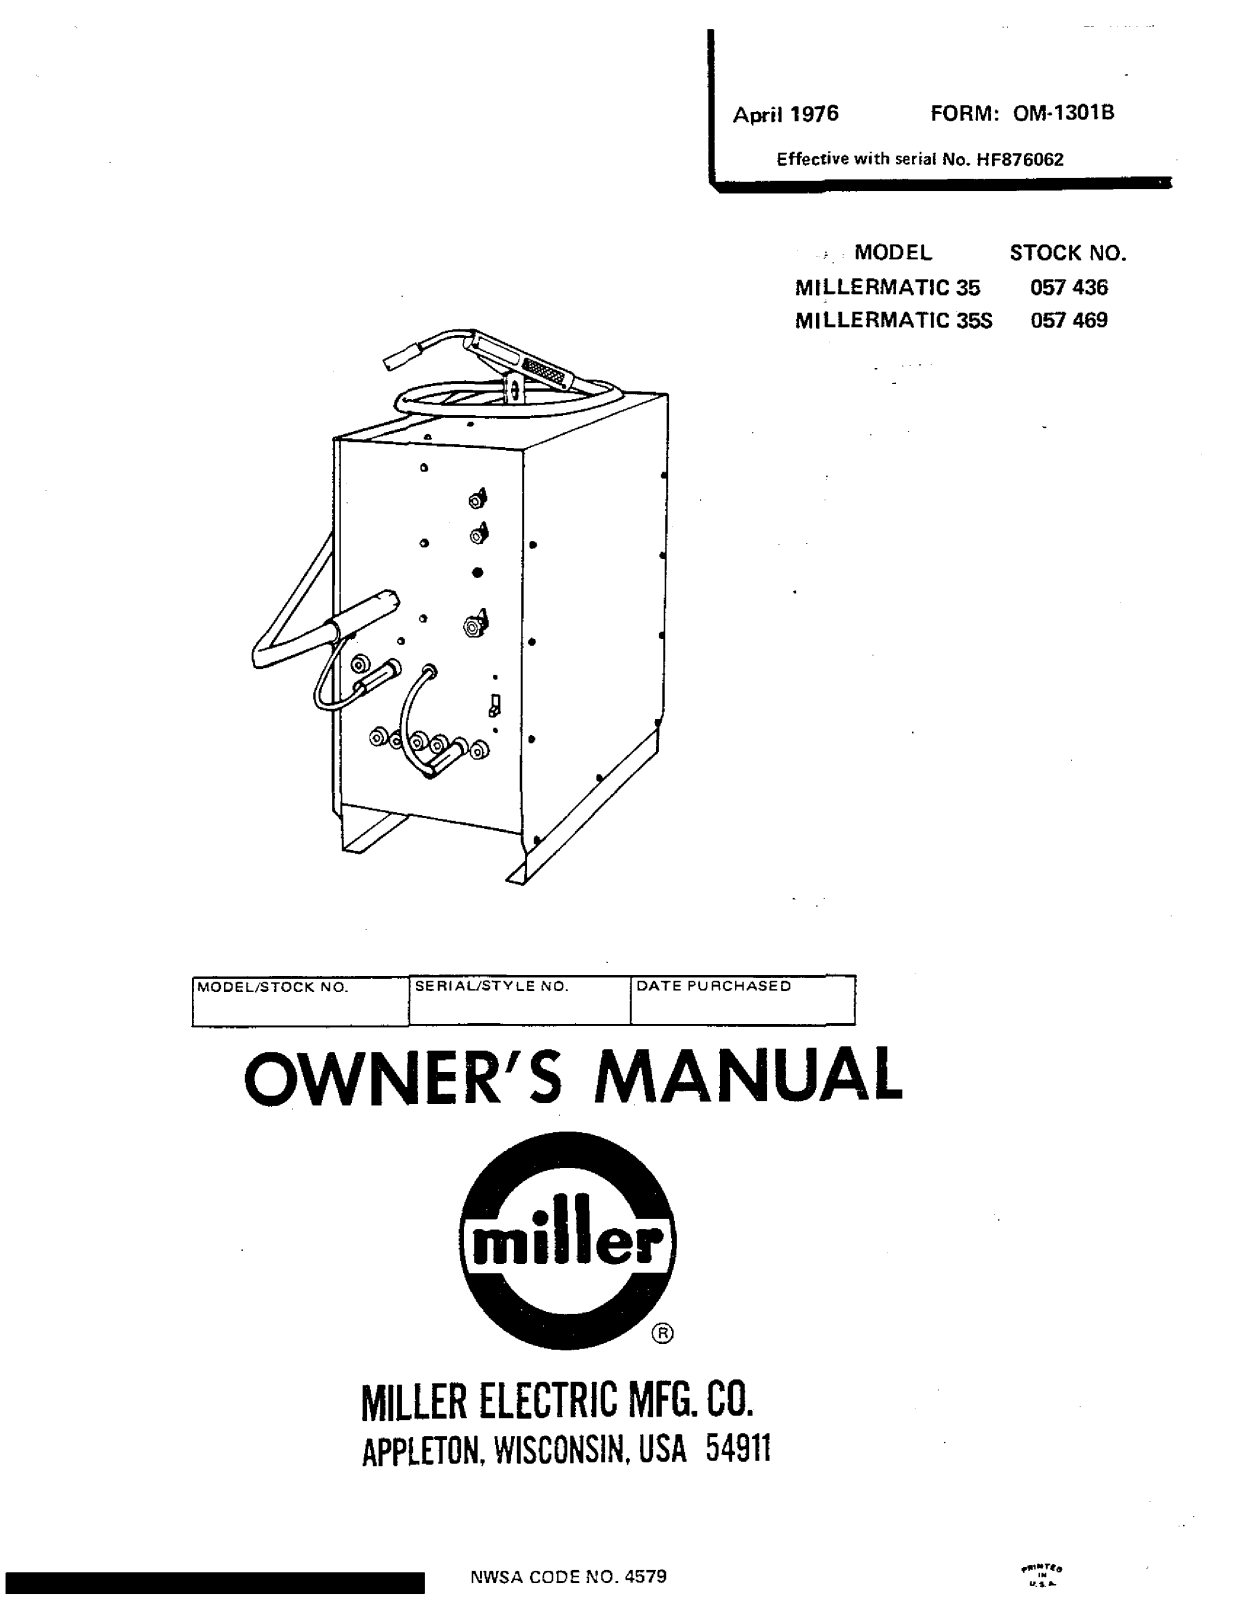 Miller Electric MILLERMATIC 35, MILLERMATIC 35S Owner's Manual